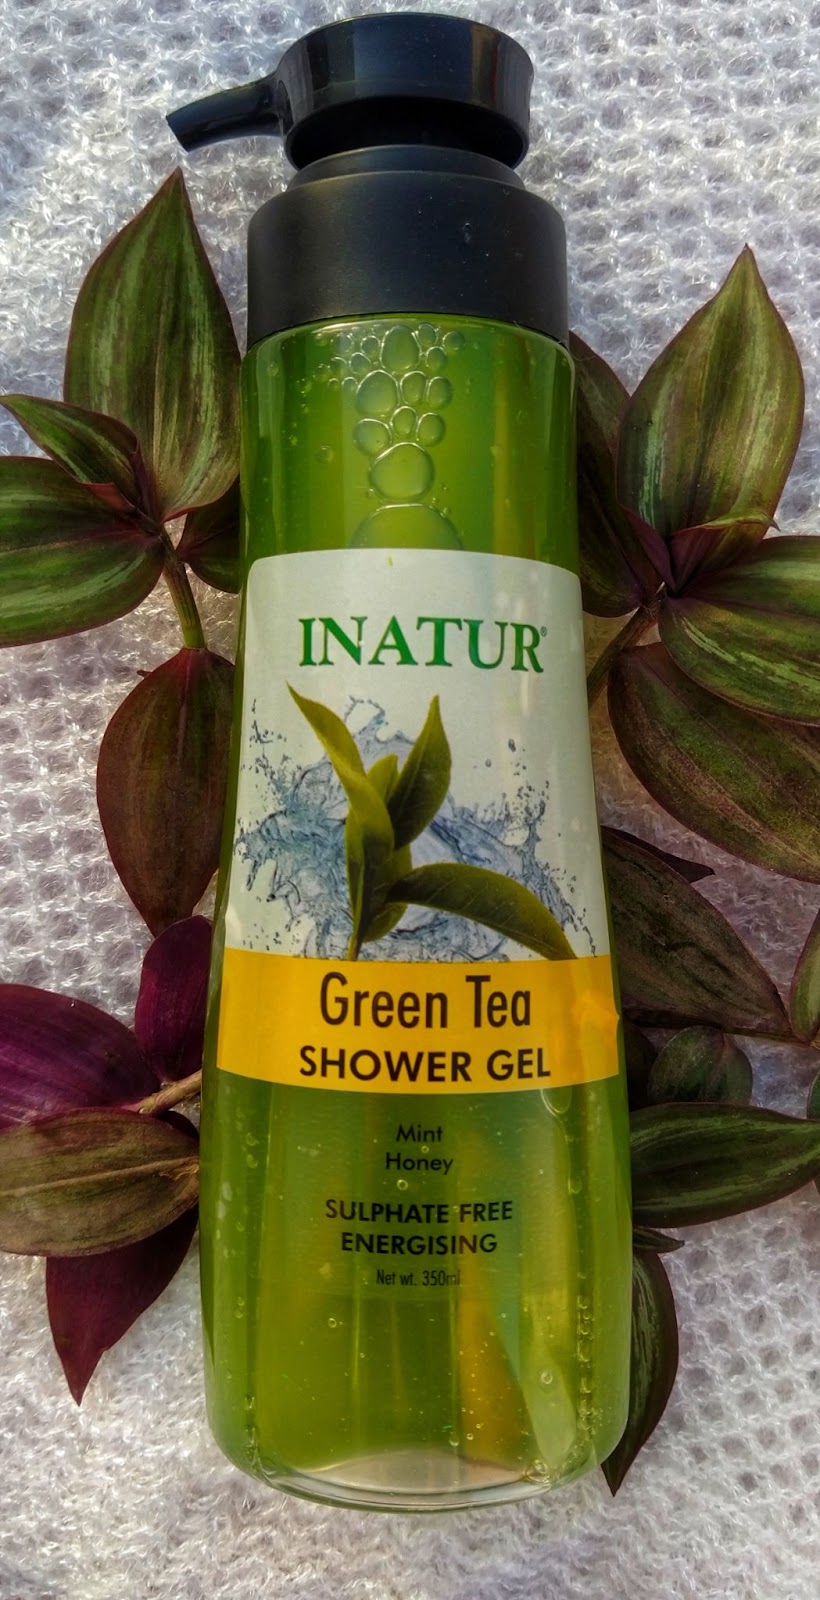 INATUR Green Tea Shower Gel Review